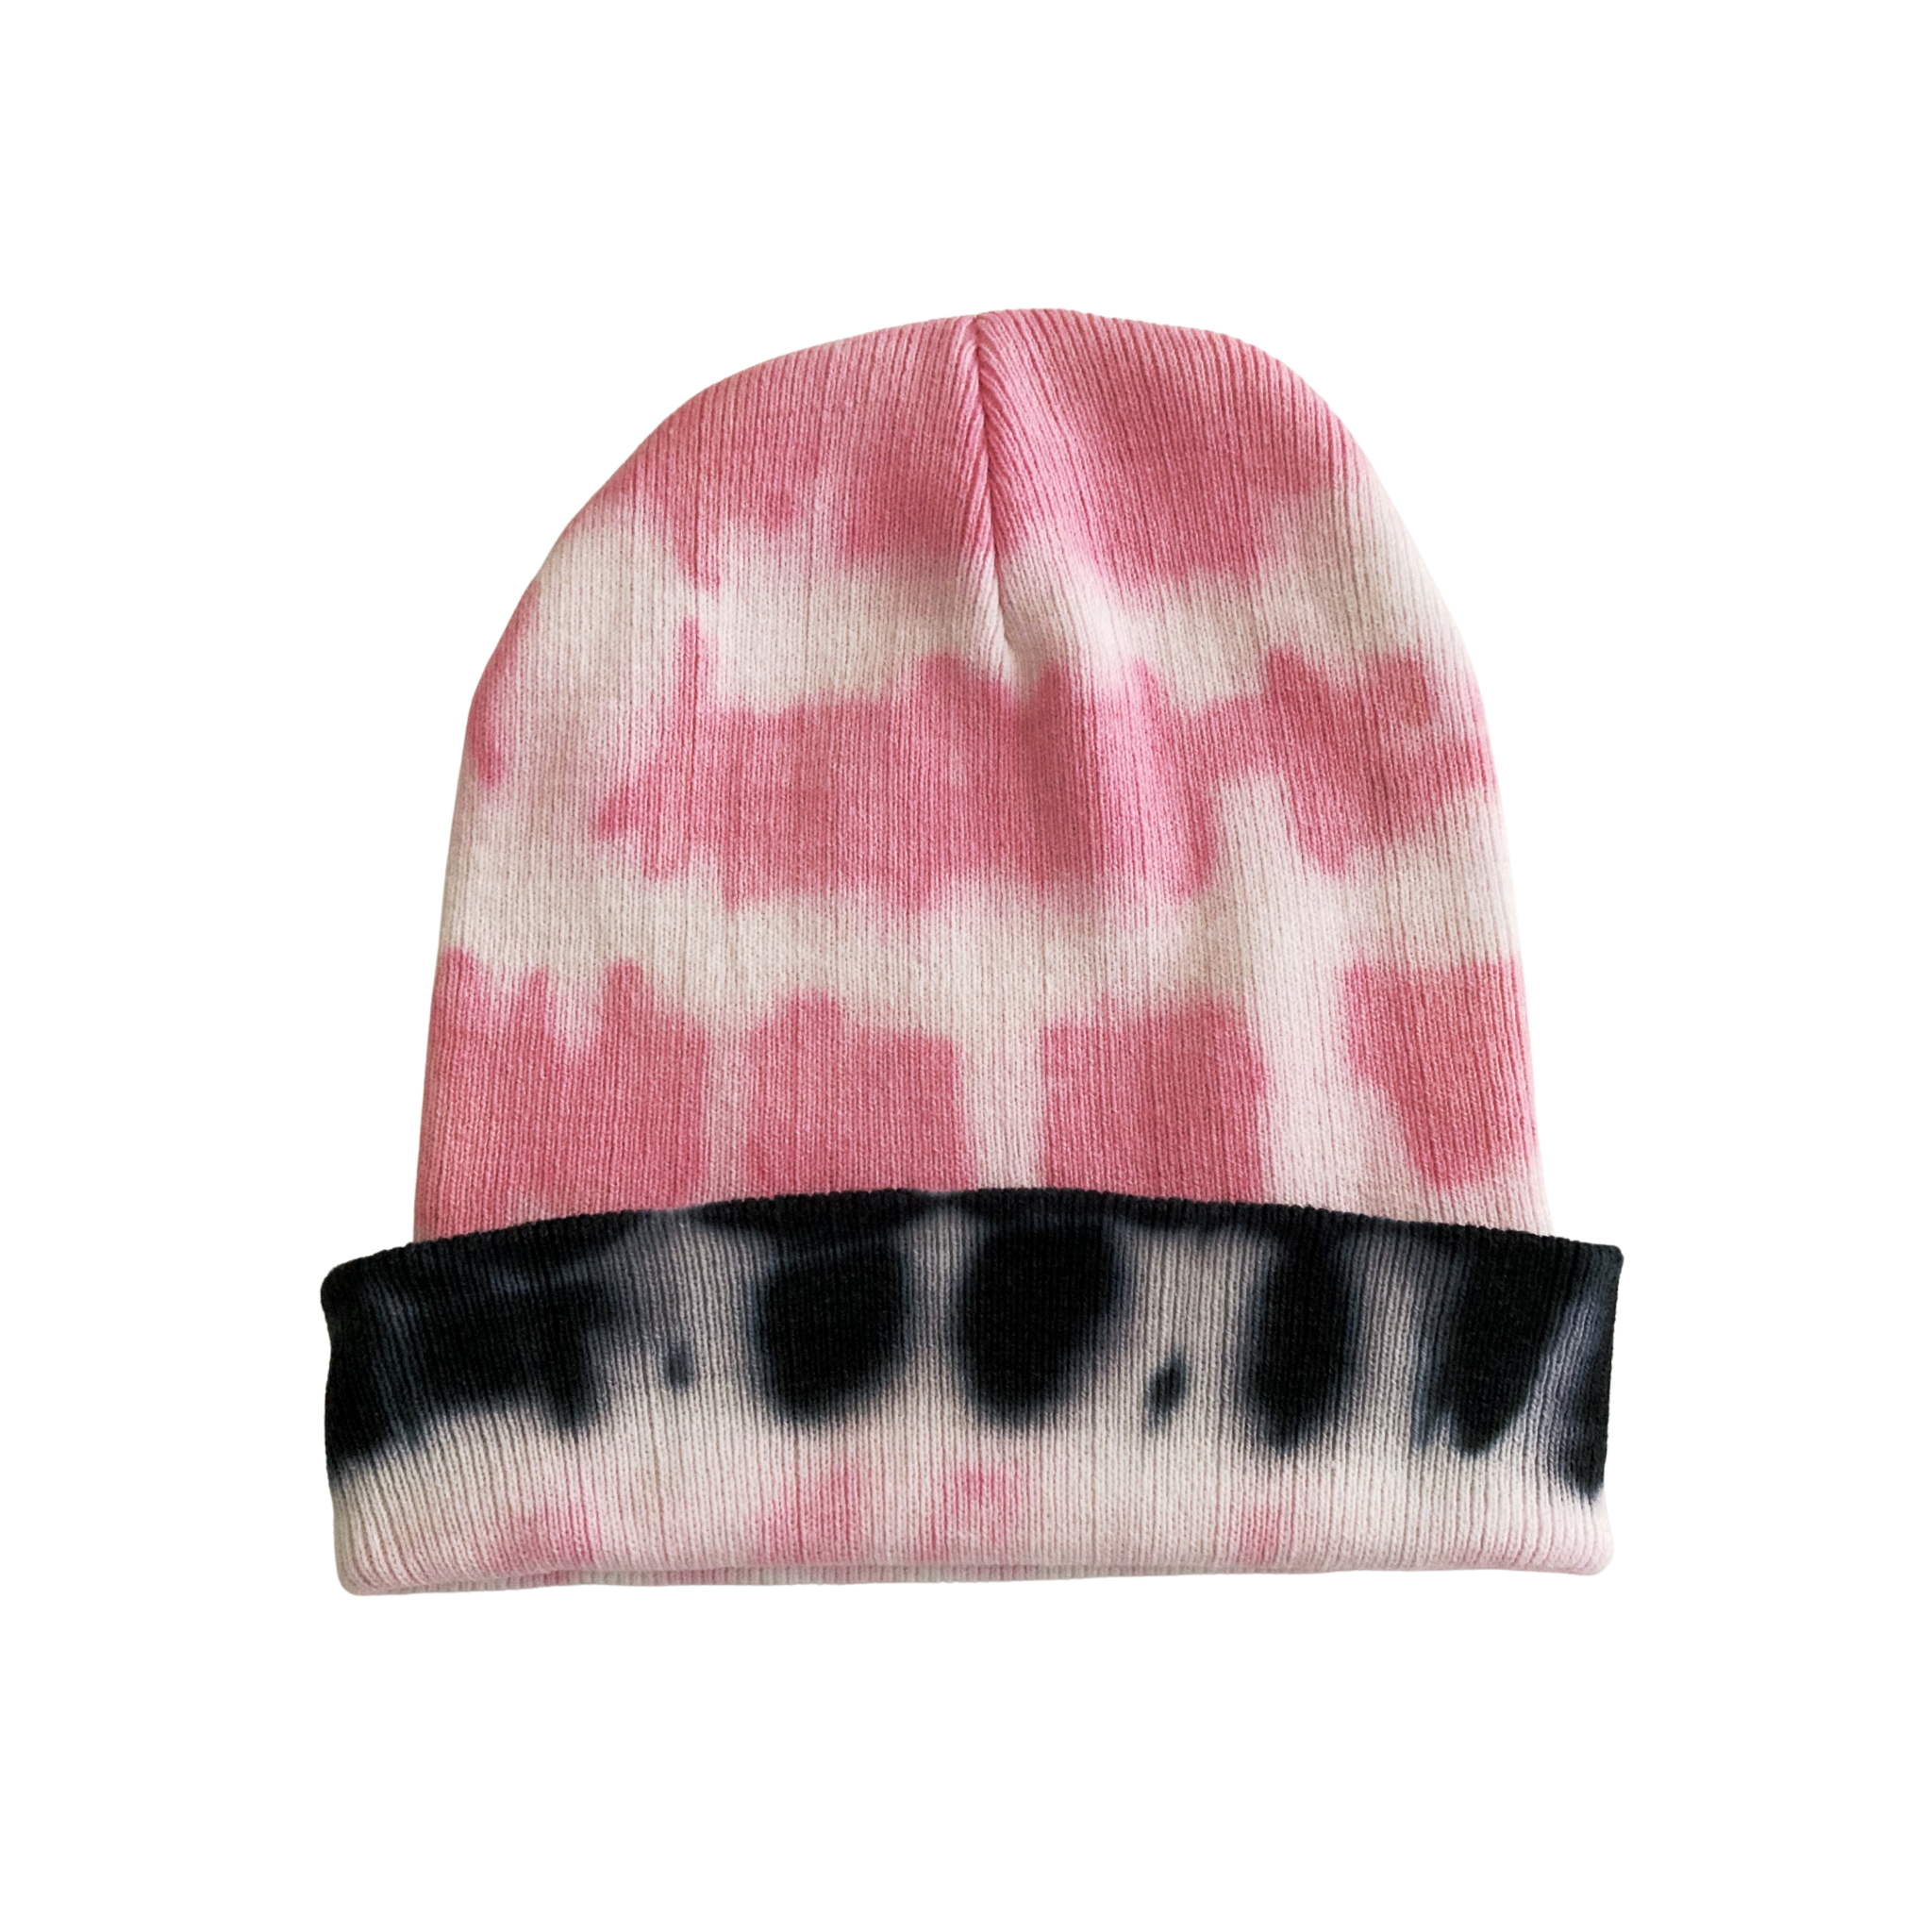 Shibori Pink and Black Tie Dye Beanie Hat, Women, Teen